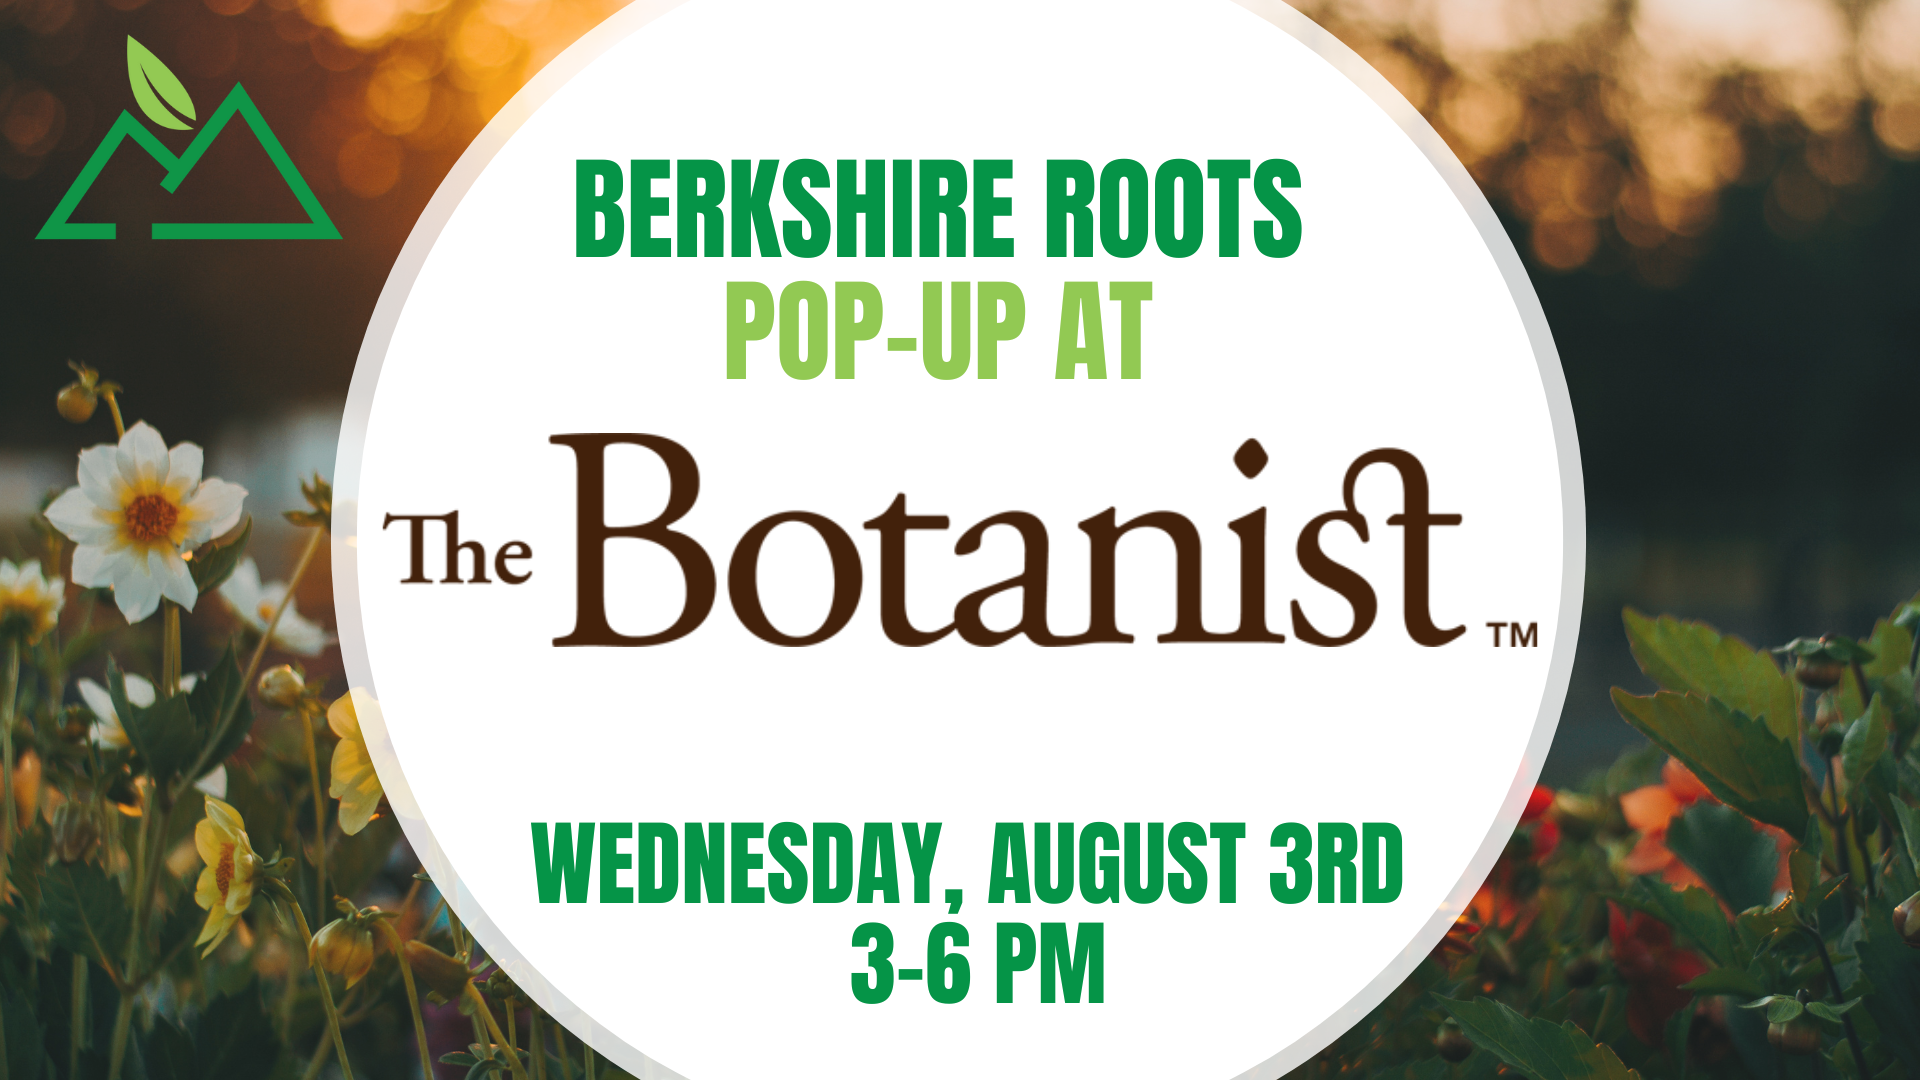 The Botanist pop up